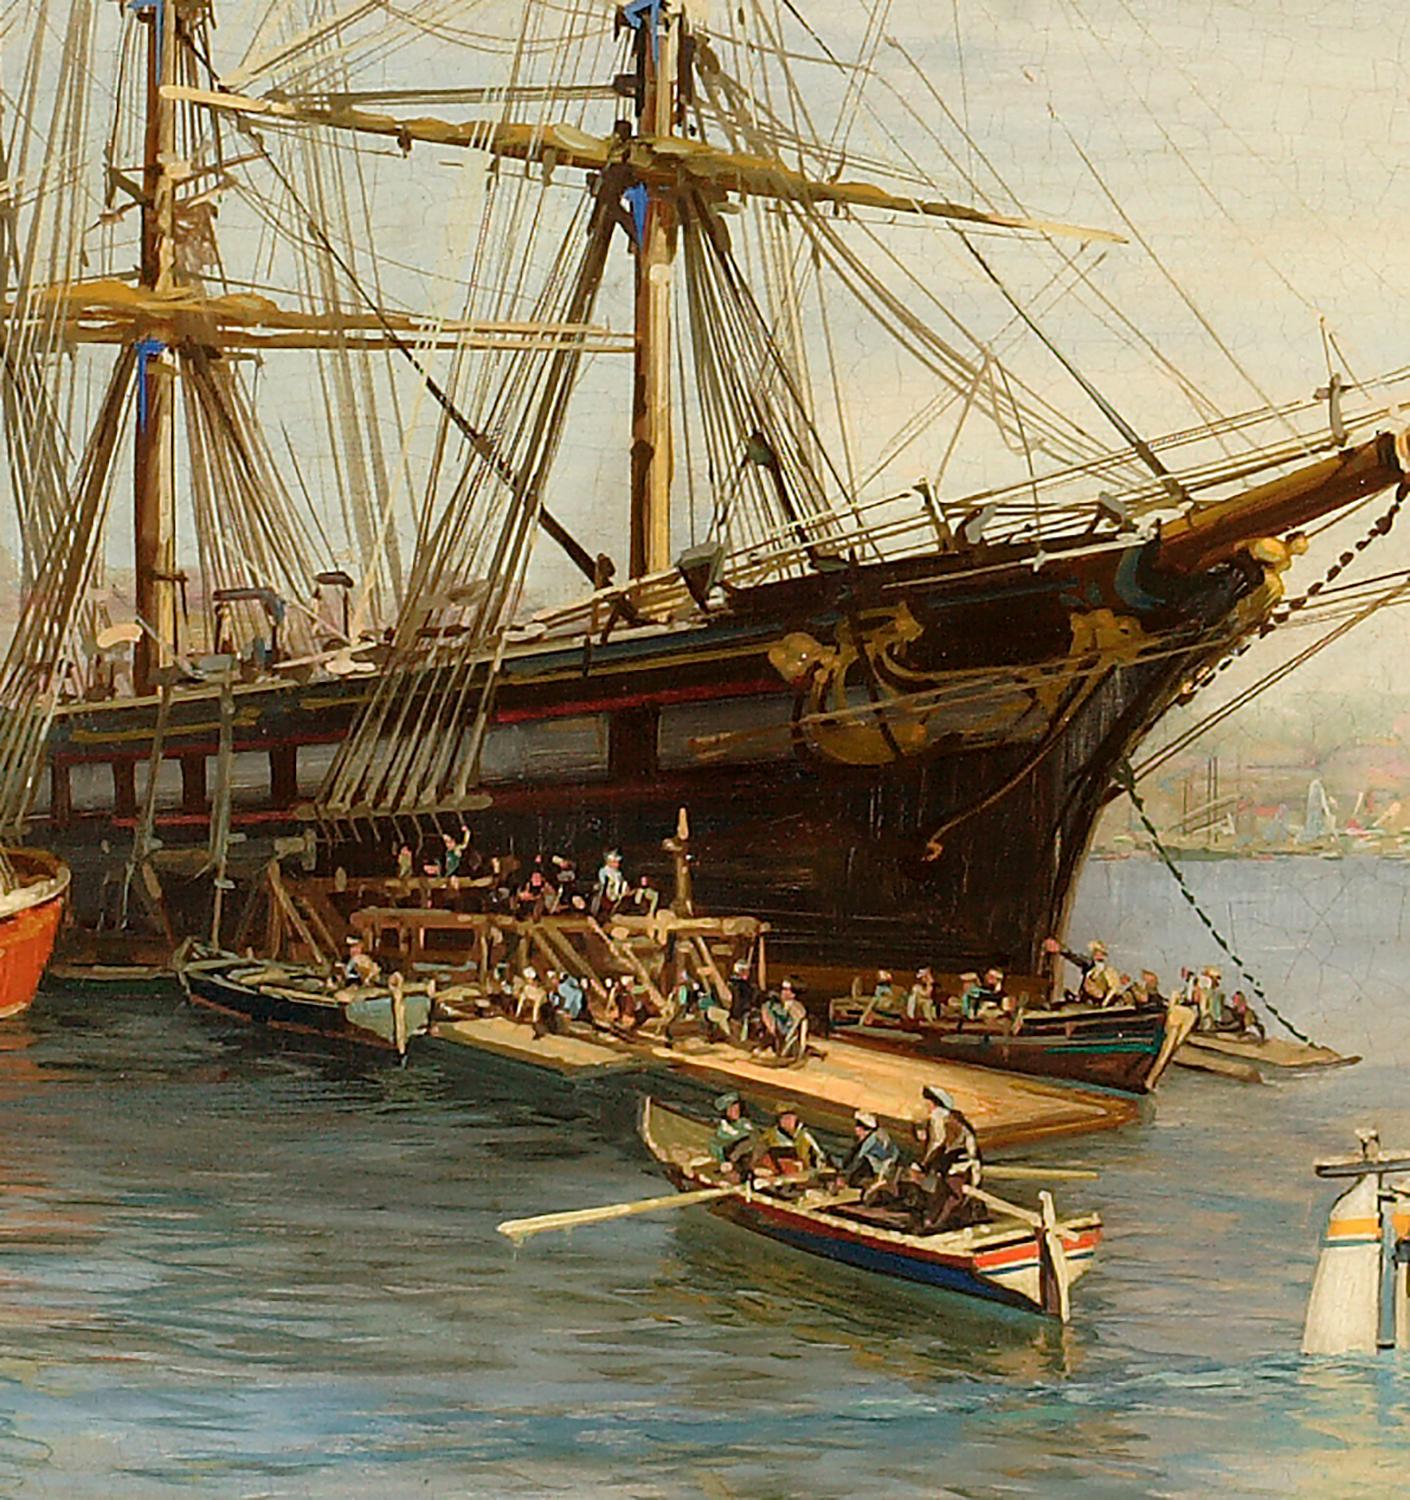 SEAPORT - Italian sailing boat oil on canvas painting by John Stevens 3